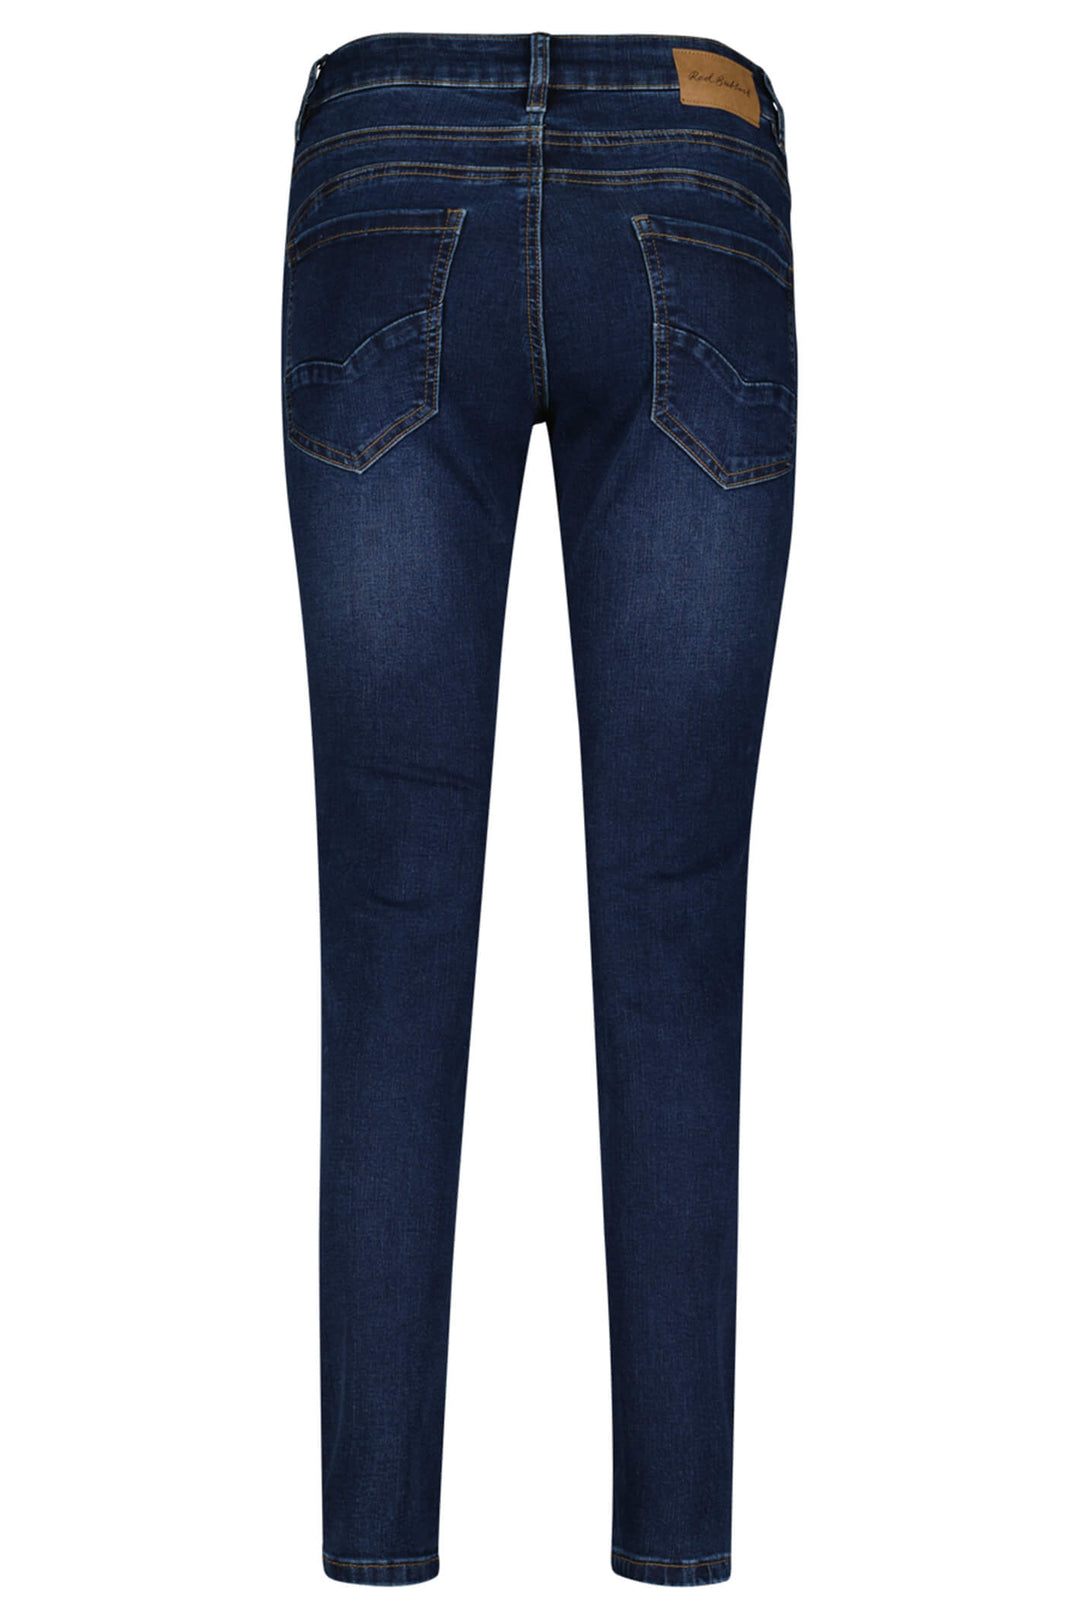 Red Button SRB4064 Sissy Dark Blue Jeans - Olivia Grace Fashion